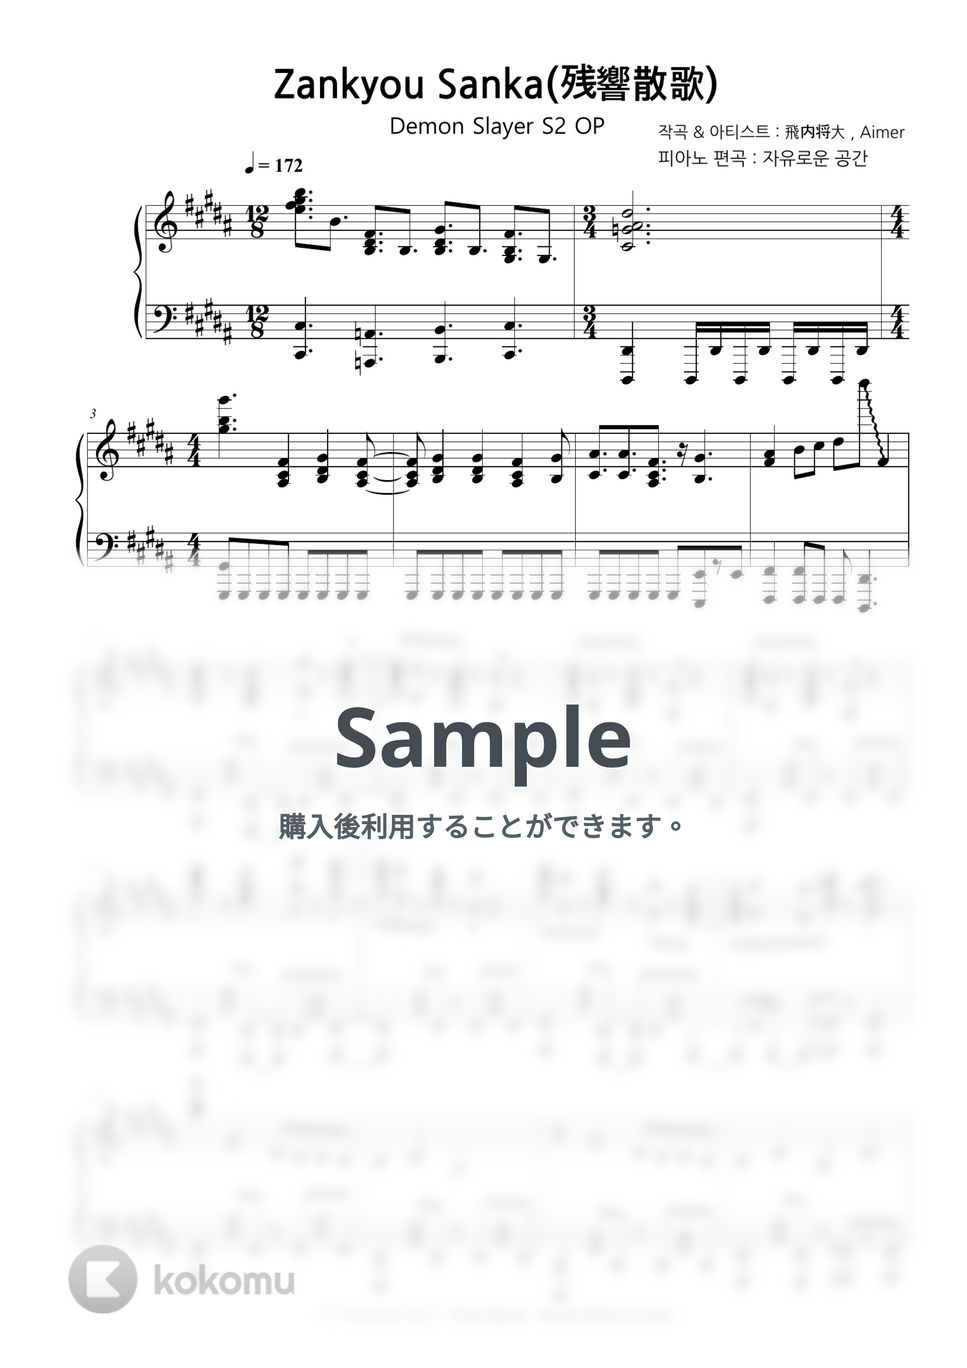 飛内将大 - 残響散歌 (鬼滅の刃 OST) by Free Space / Anime Piano Covers